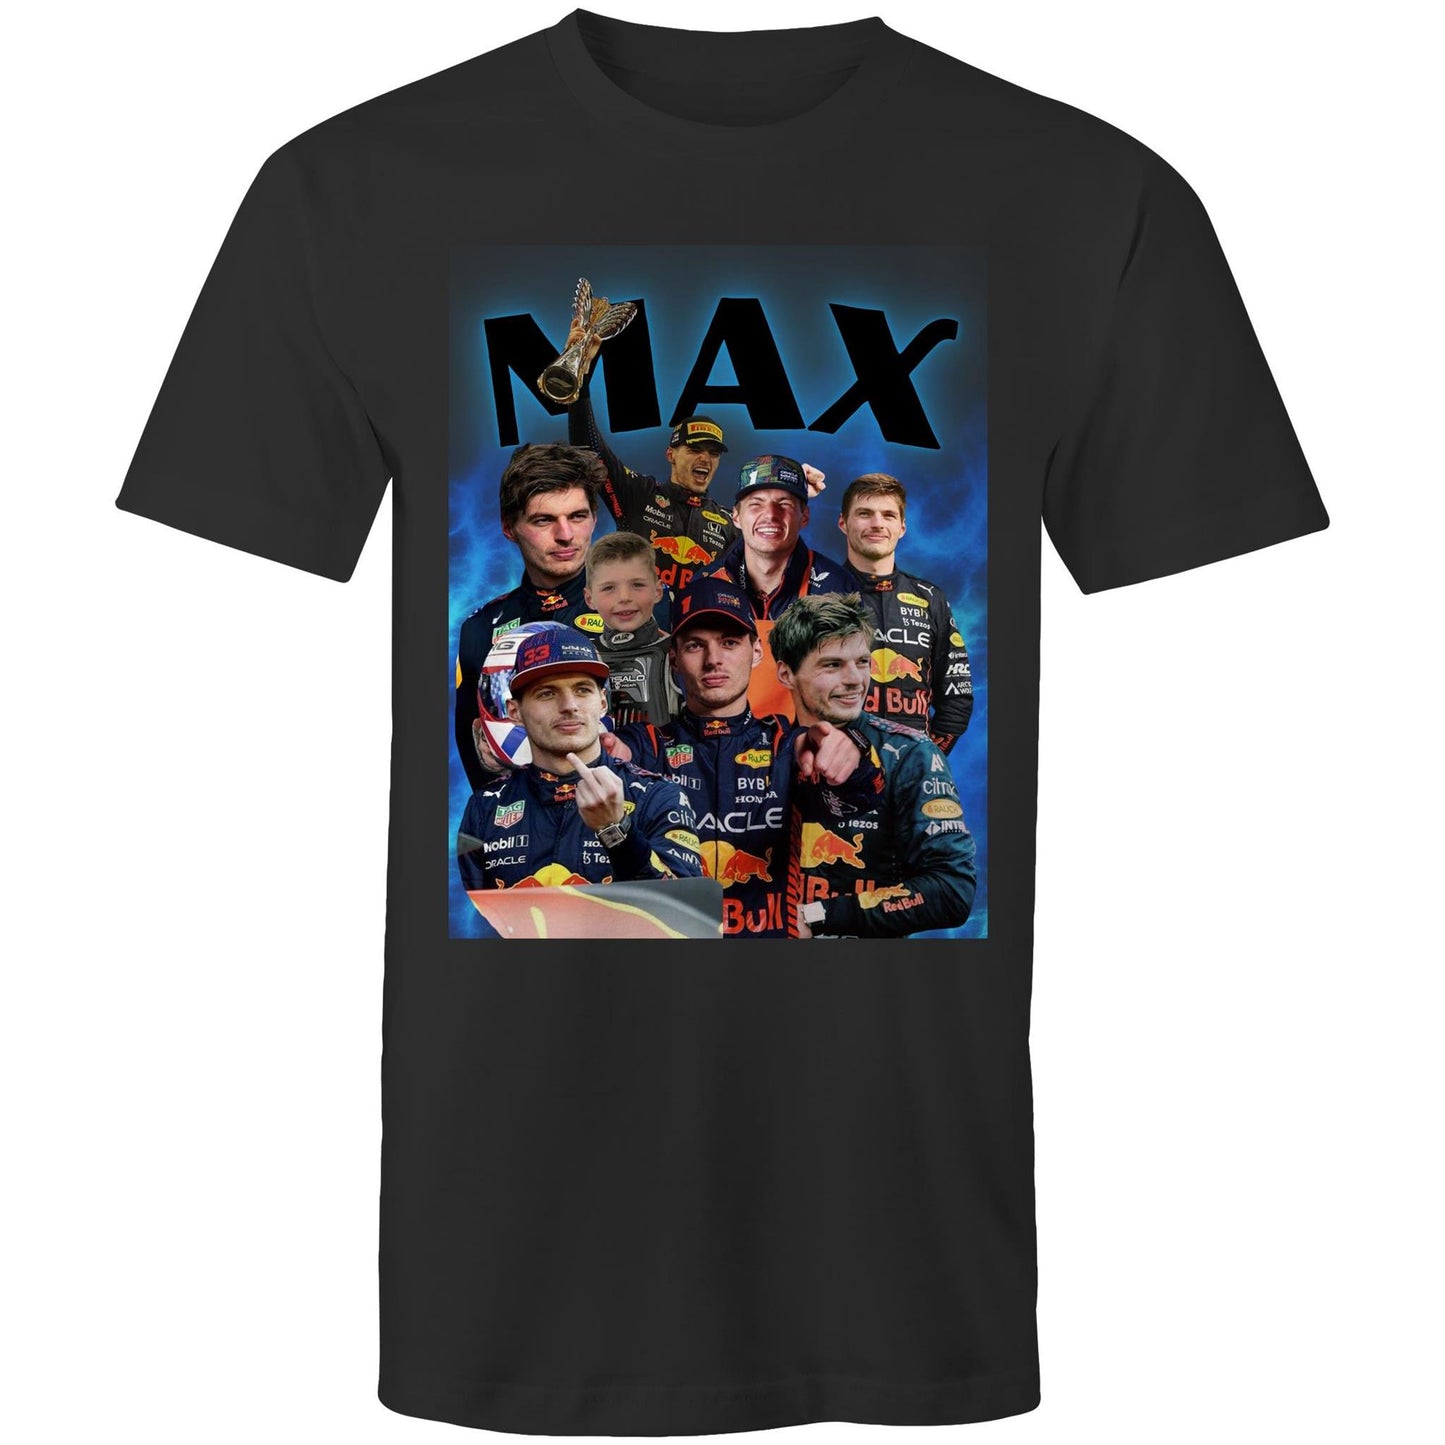 Max Vintage T-Shirt